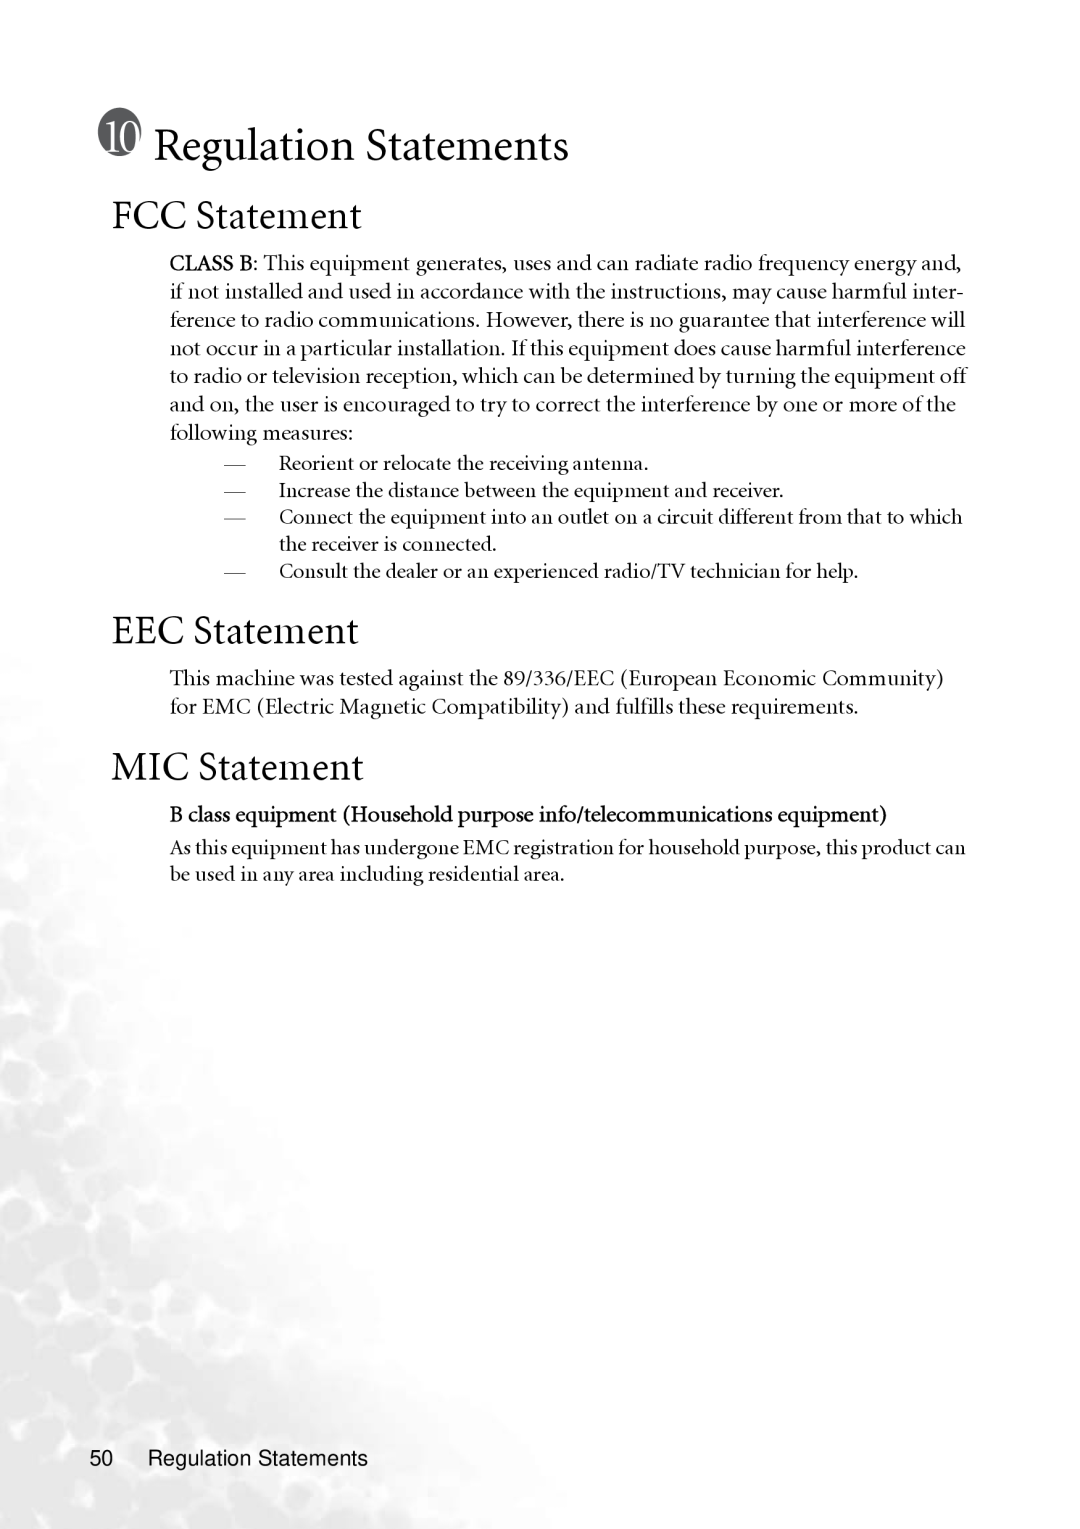 BenQ PB8240, PB8250 user manual Regulation Statements, FCC Statement, EEC Statement, MIC Statement 